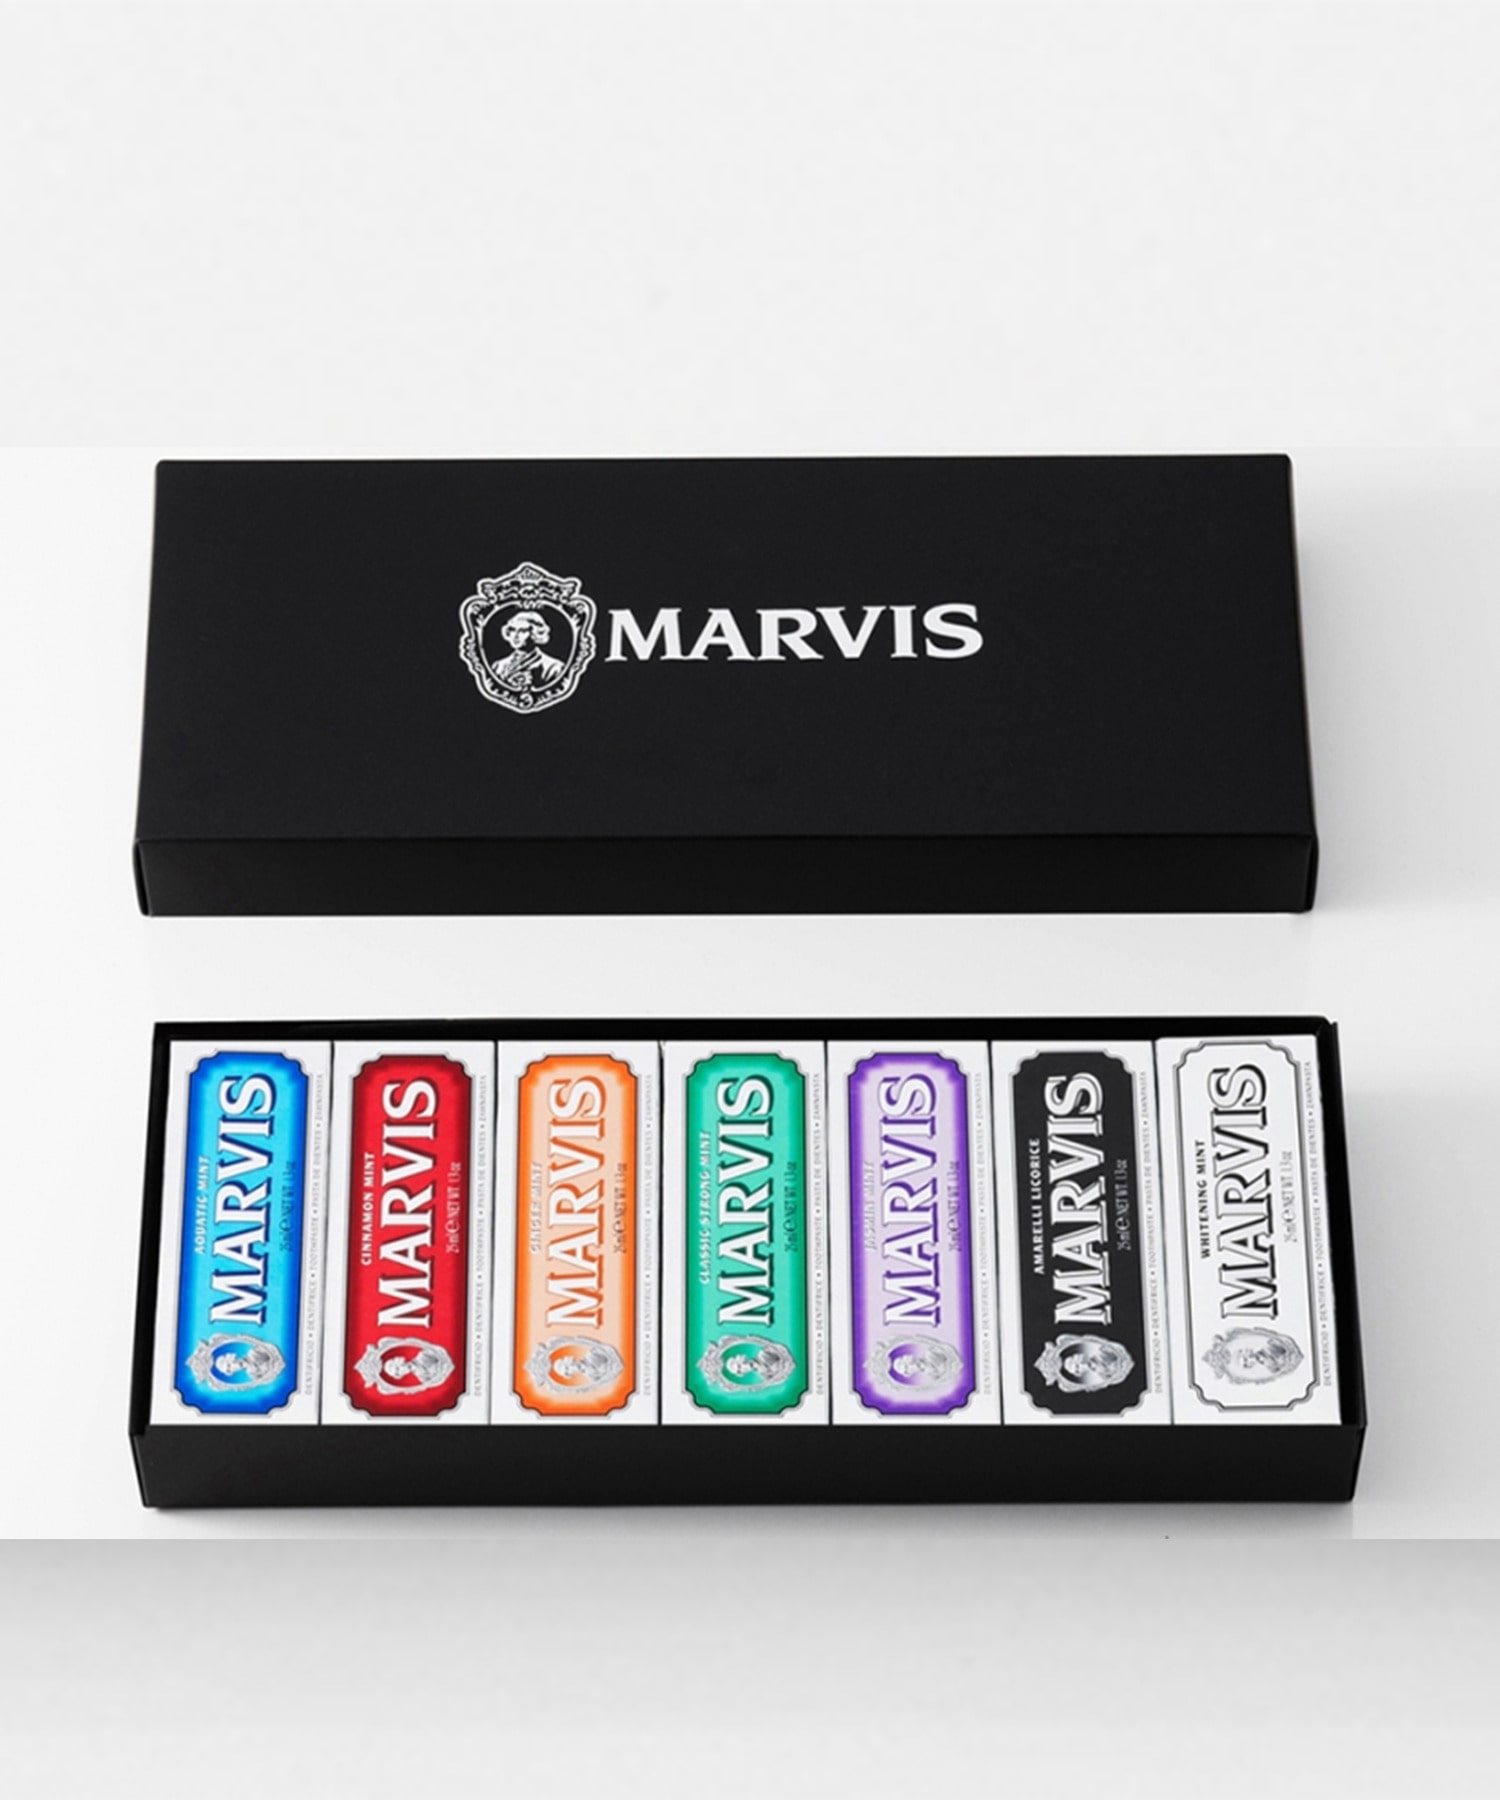 MARVIS 歯磨き粉ジンジャーミント25ml - 5